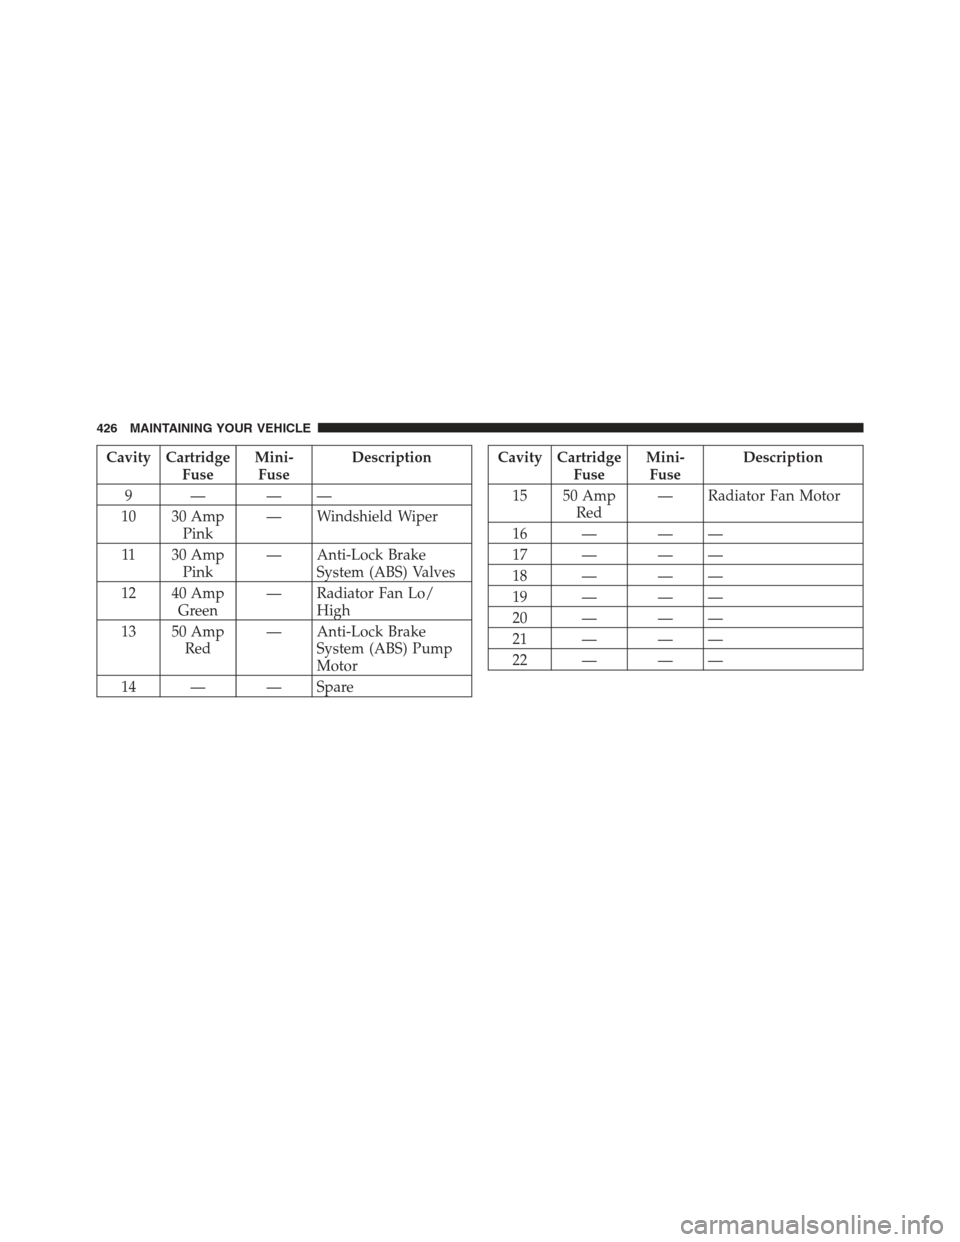 DODGE CHALLENGER 2012 3.G User Guide Cavity CartridgeFuseMini-
Fuse Description
9— ——
10 30 Amp Pink — Windshield Wiper
11 30 Amp Pink — Anti-Lock Brake
System (ABS) Valves
12 40 Amp Green — Radiator Fan Lo/
High
13 50 Amp Re